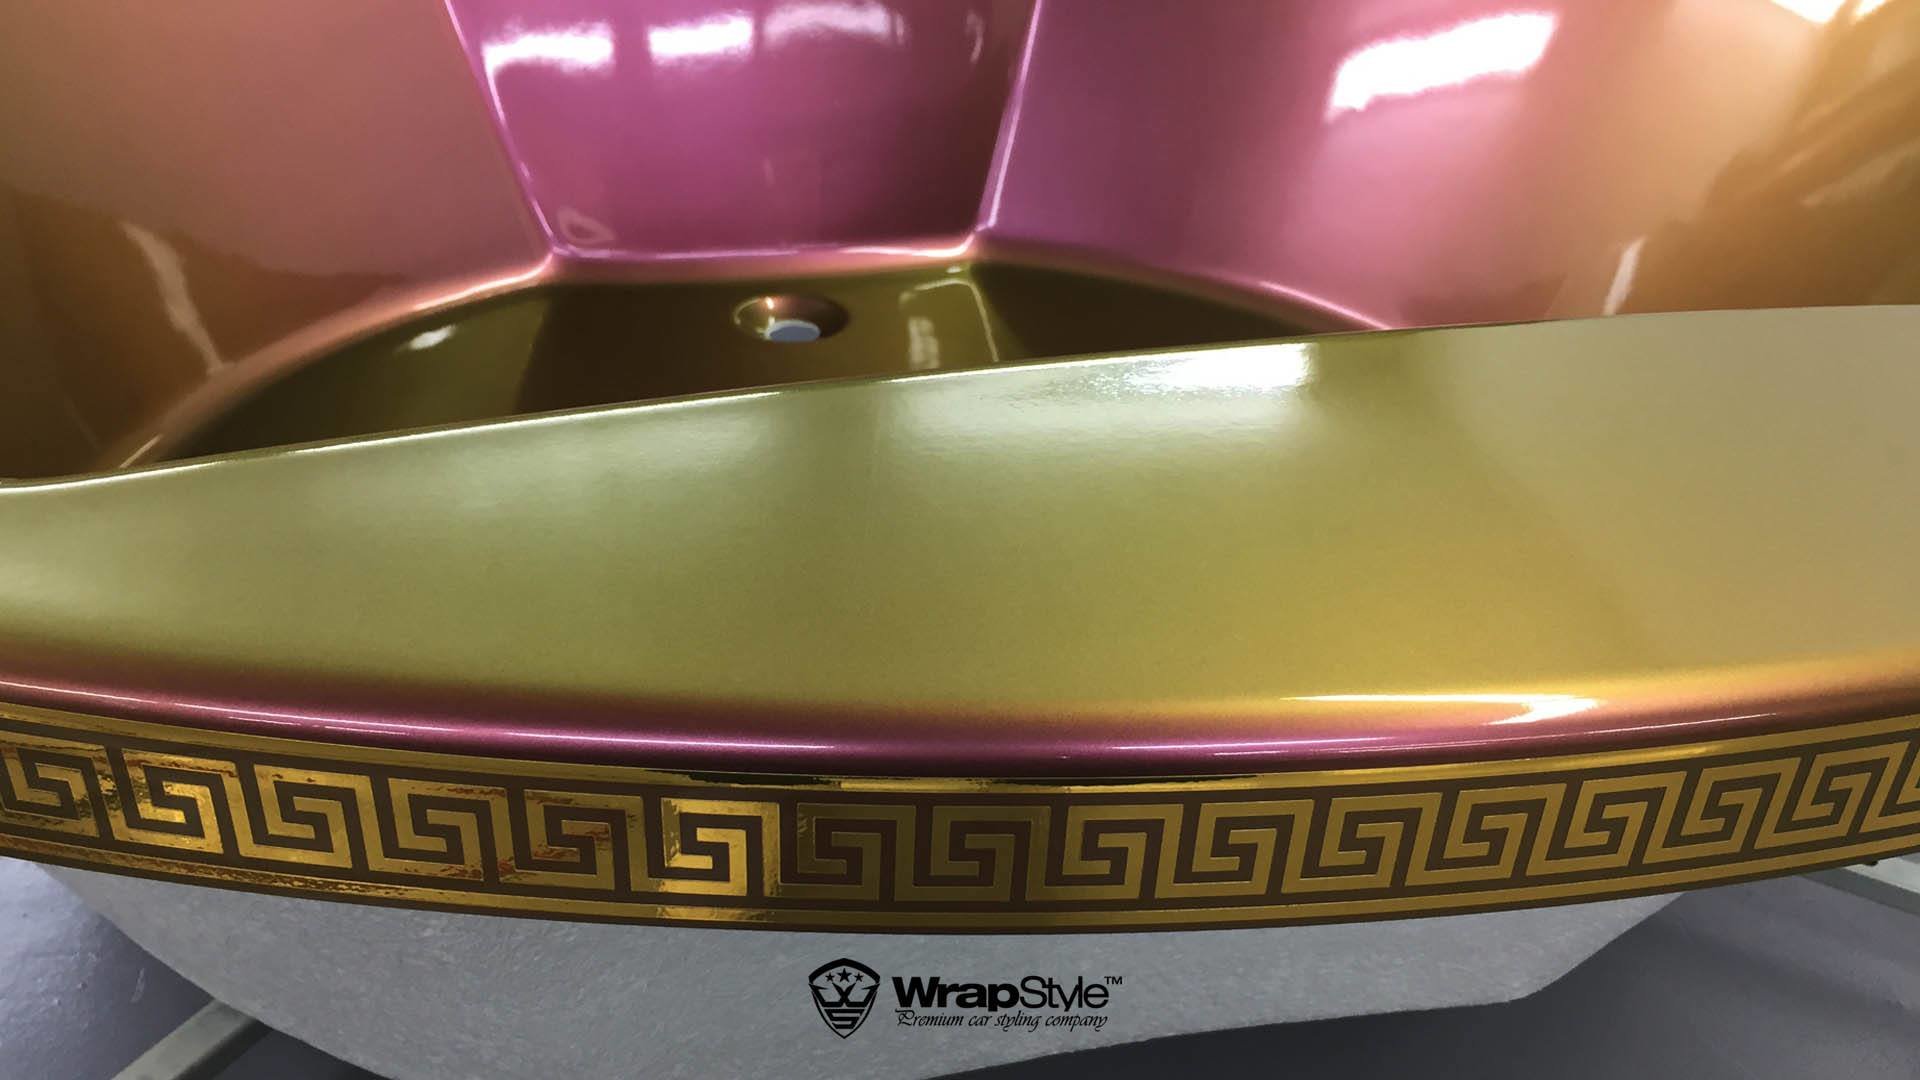 Bath - Versace Gold wrap